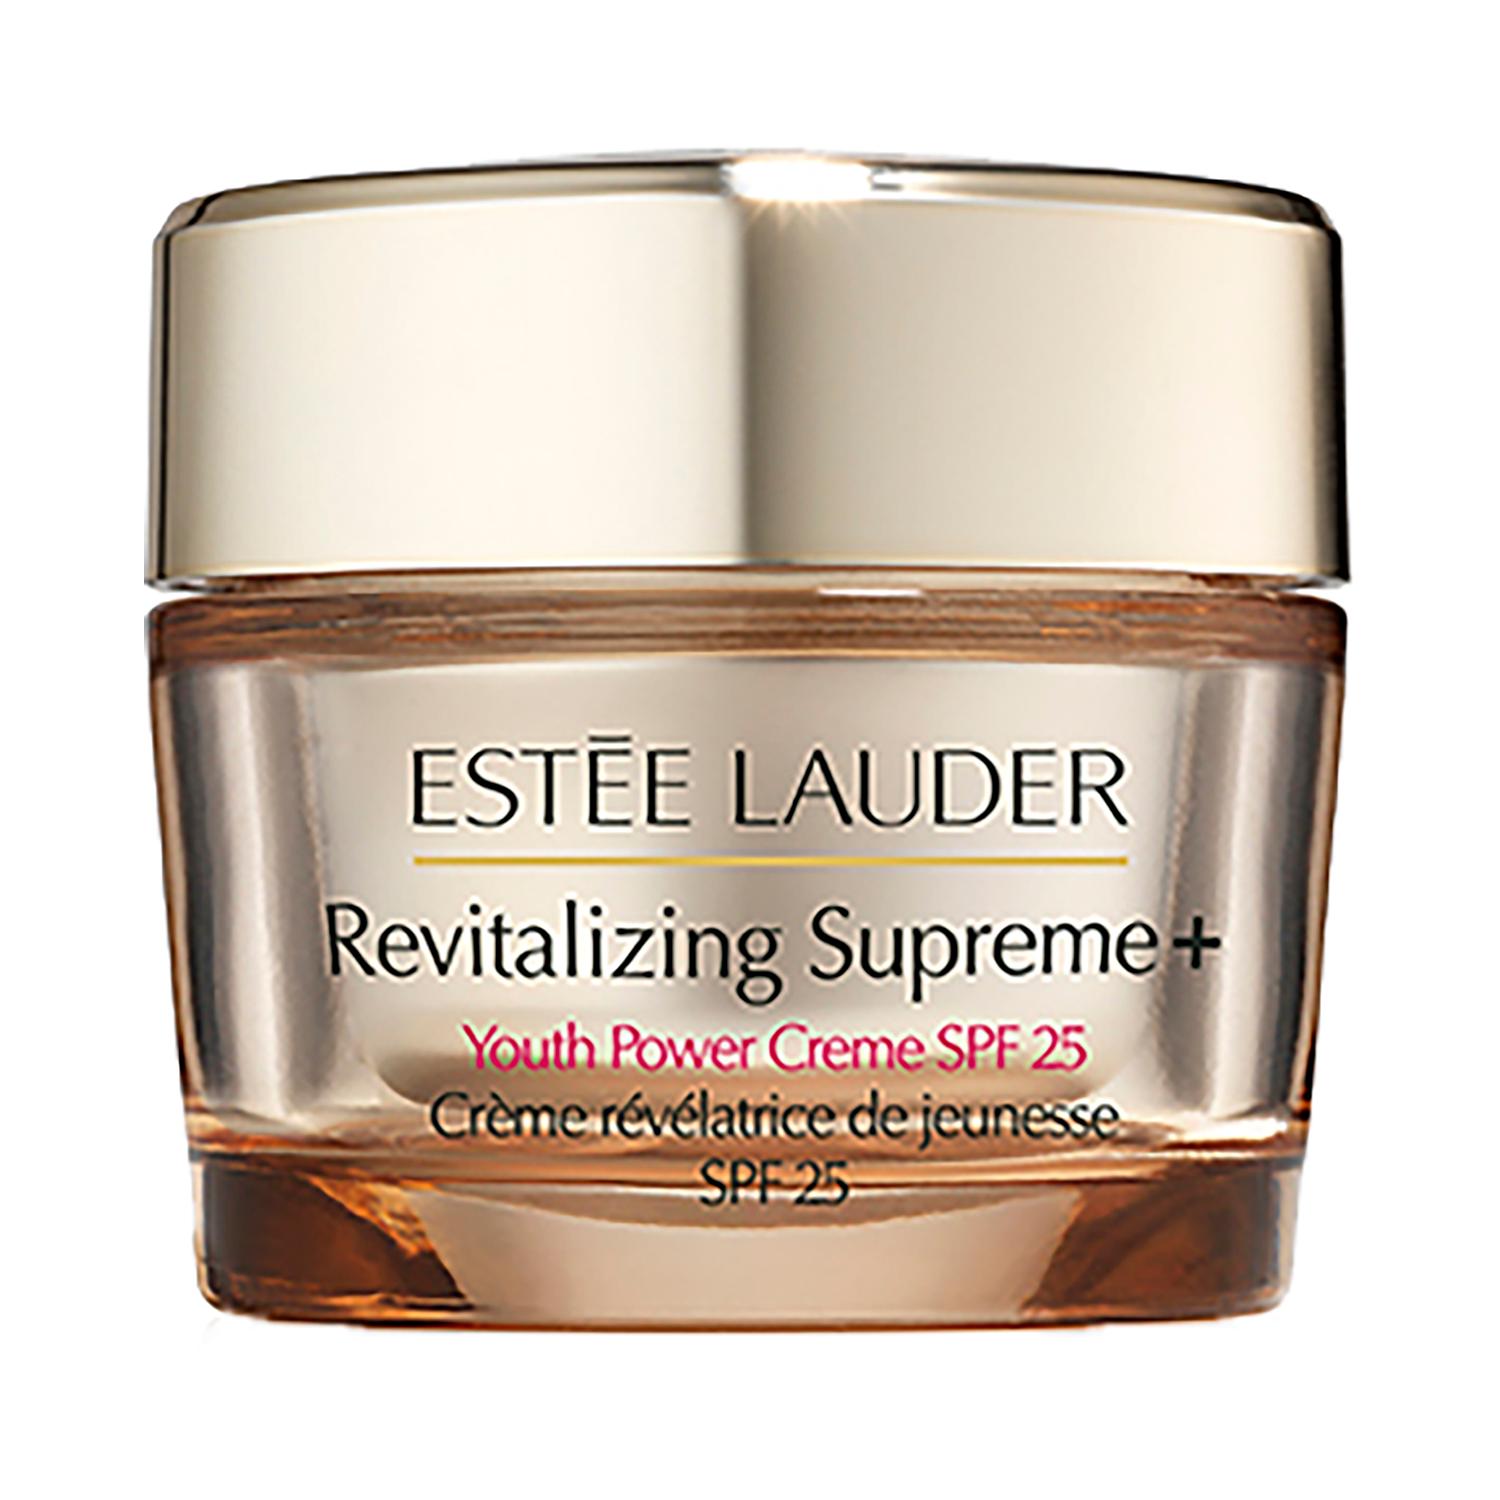 Estee Lauder | Estee Lauder Revitalizing Supreme+ Youth Power Creme With SPF 25 (50 ml)